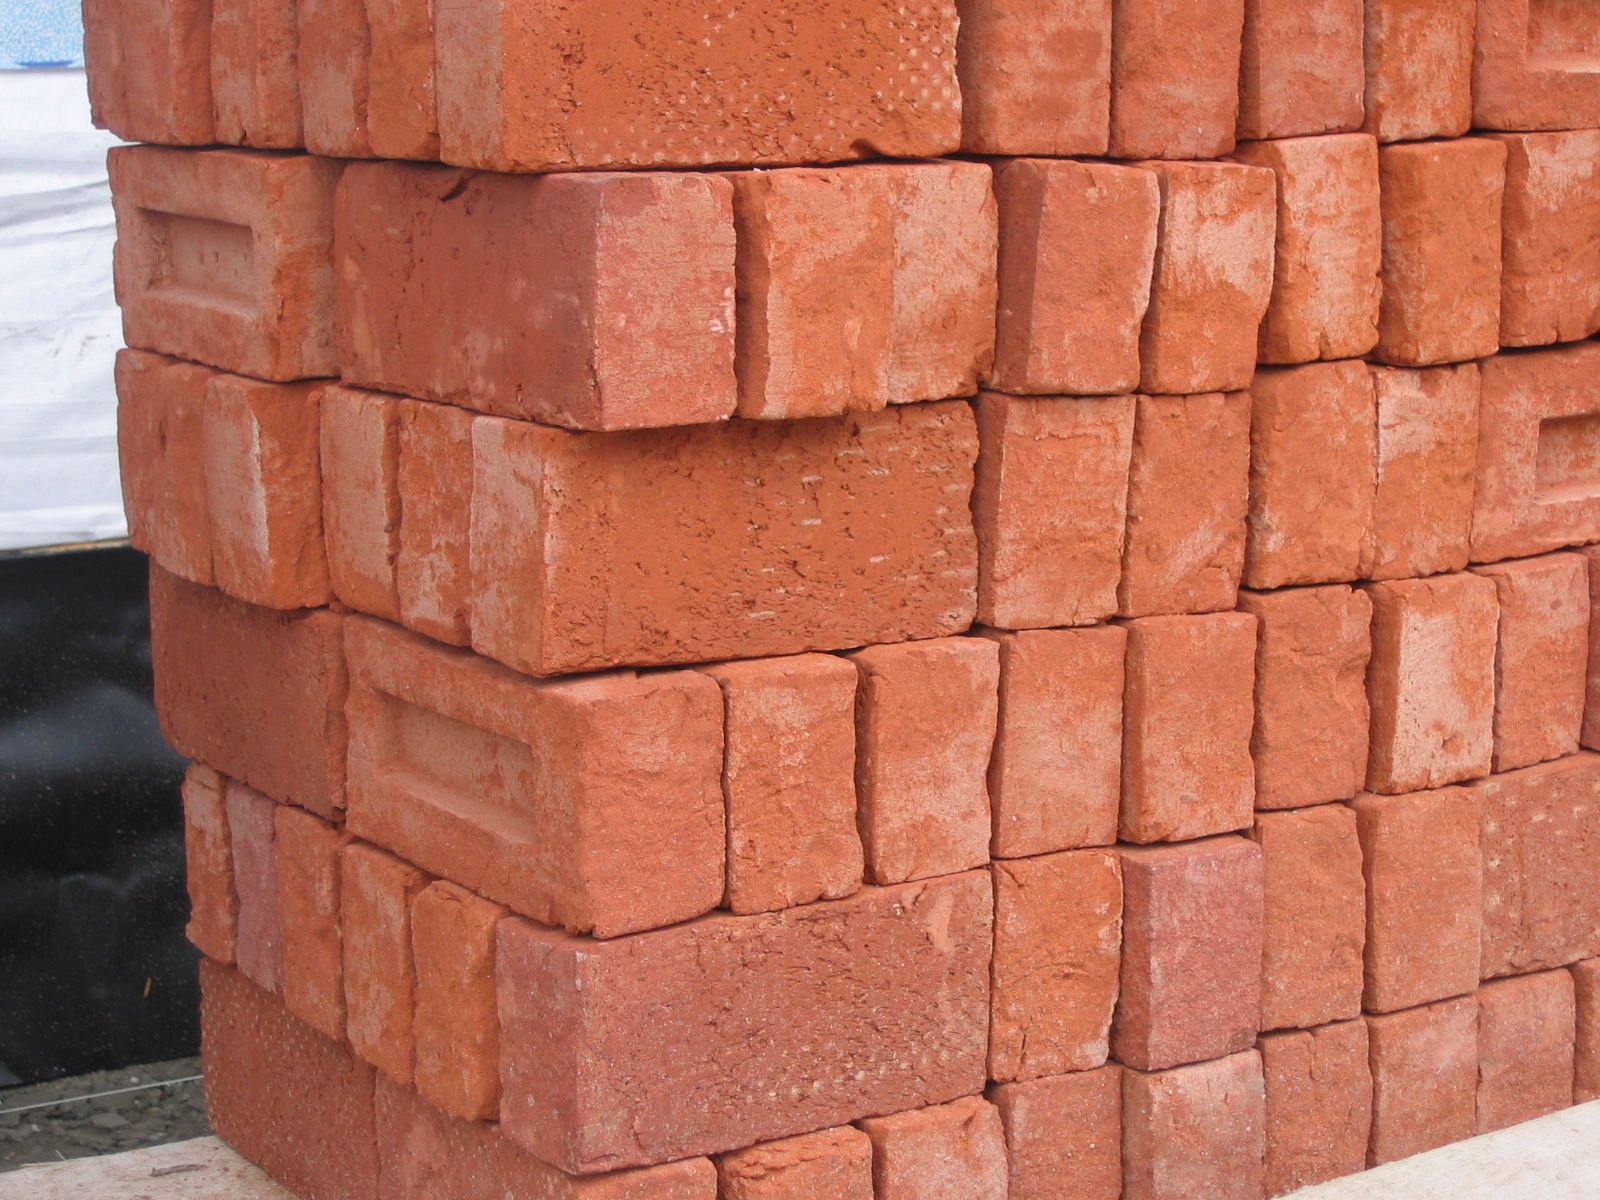 File:Stapel bakstenen - Pile of bricks 2005 Fruggo.jpg - Wikimedia ...